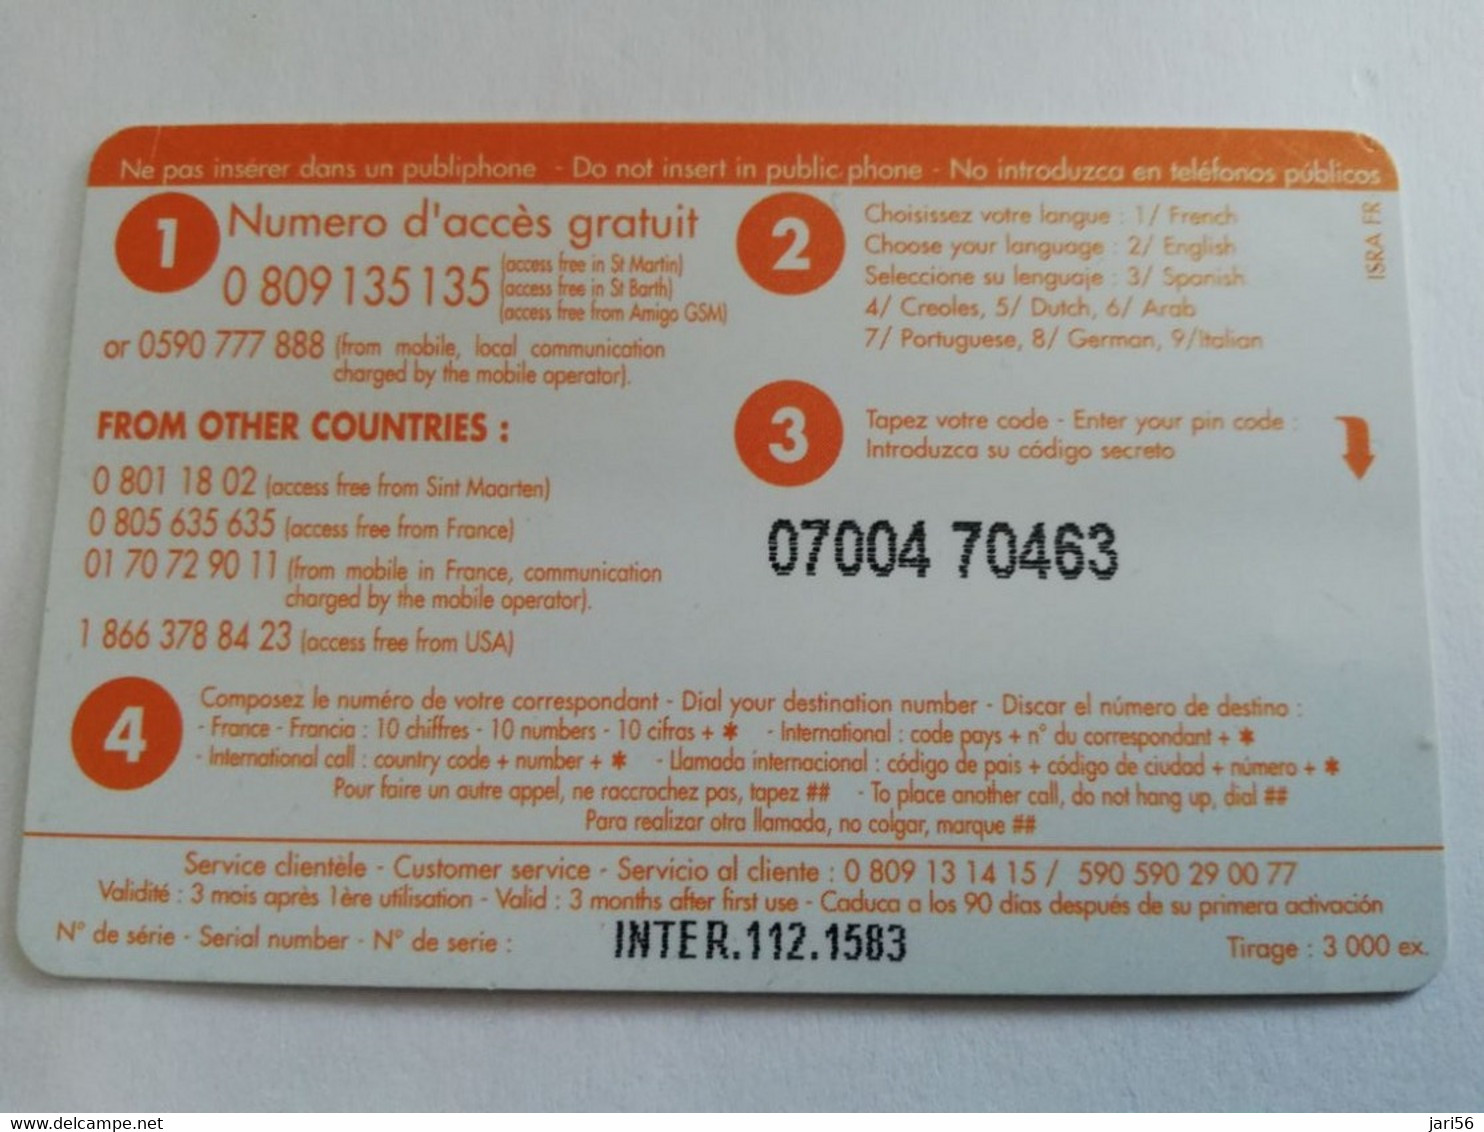 ST MARTIN / INTERCARD  3 EURO    PHILIPSBURG AUTO ACCESSOIRES          NO 112  Fine Used Card    ** 6608 ** - Antillen (Frans)